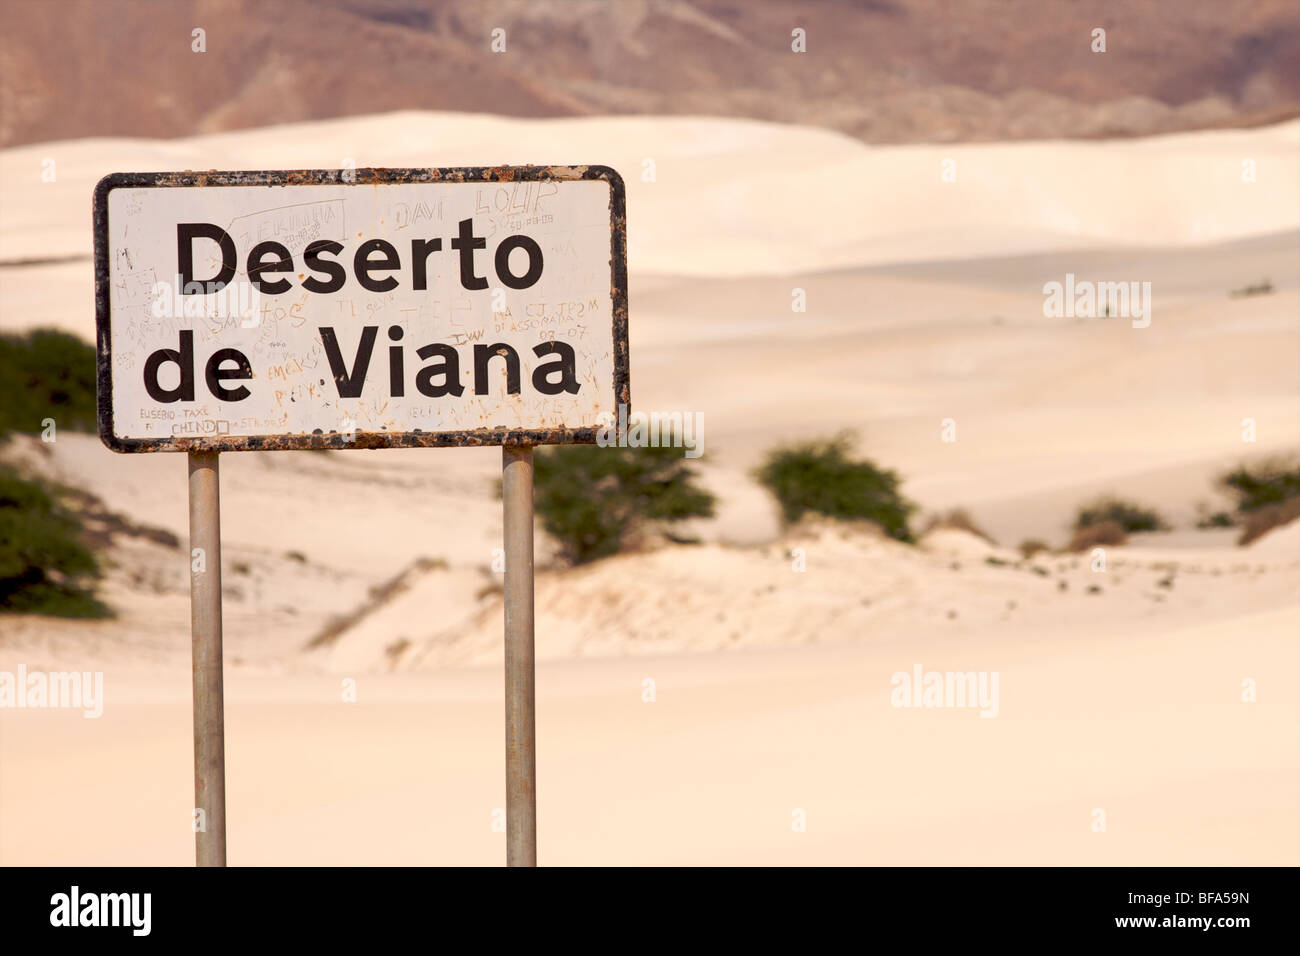 Der "Deserto de Viana' in der Mitte der Insel Boa Vista, Kap-Verde Stockfoto